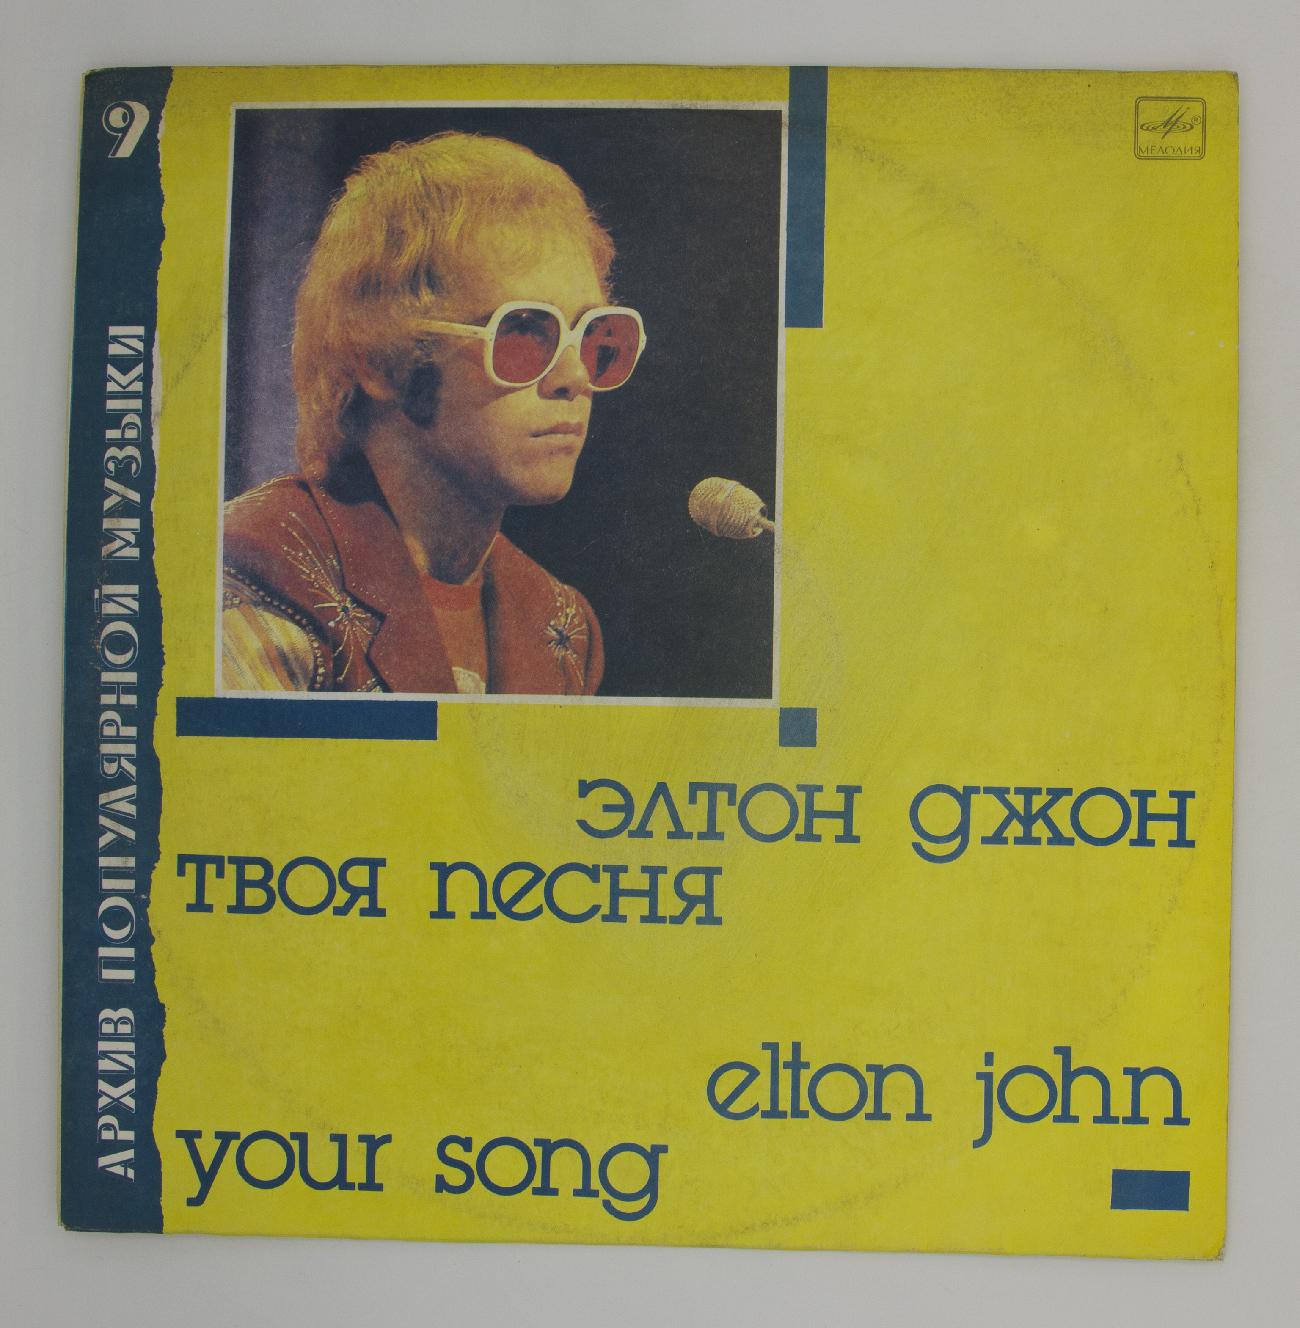 На часах твоих песня. Пластинка Элтон Джон. Elton John виниловая пластинка. Элтон Джон винил. Your Song Элтон Джон.